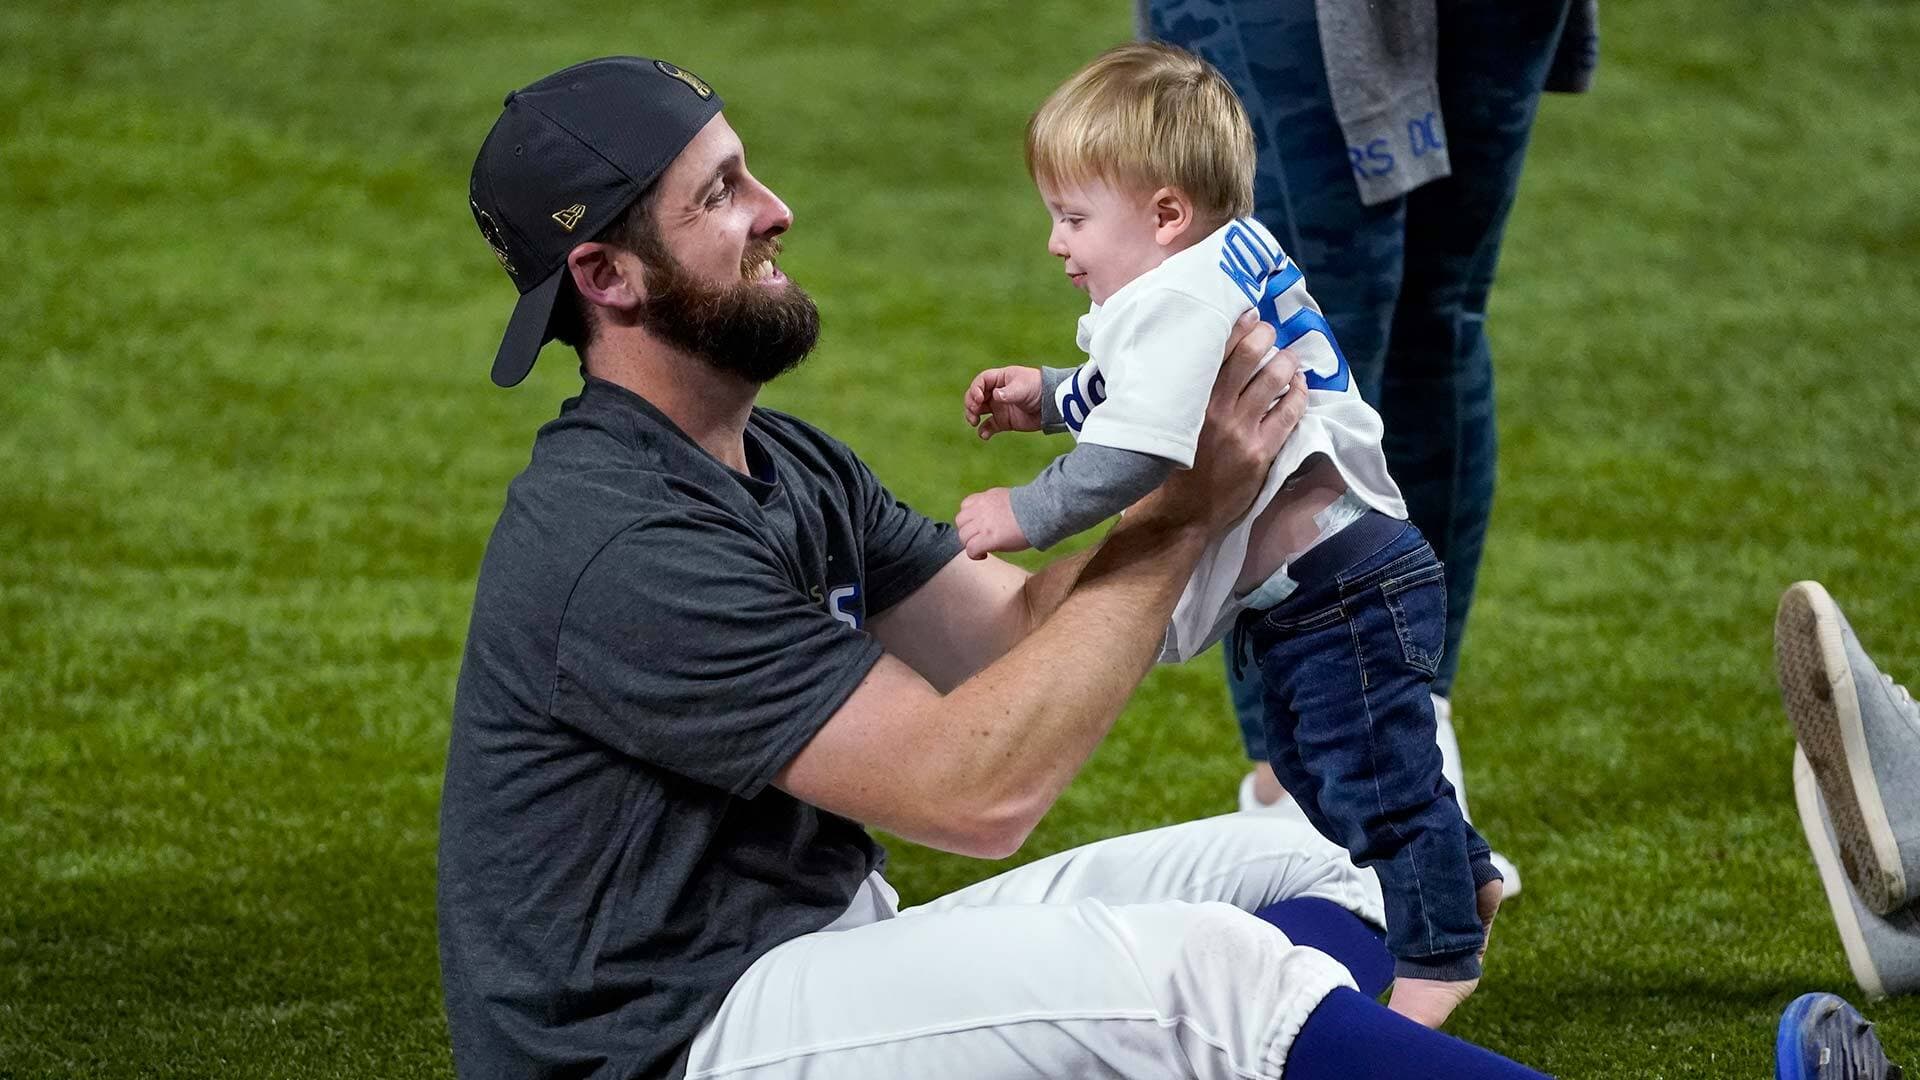 Adam Kolarek celebrates on field with son